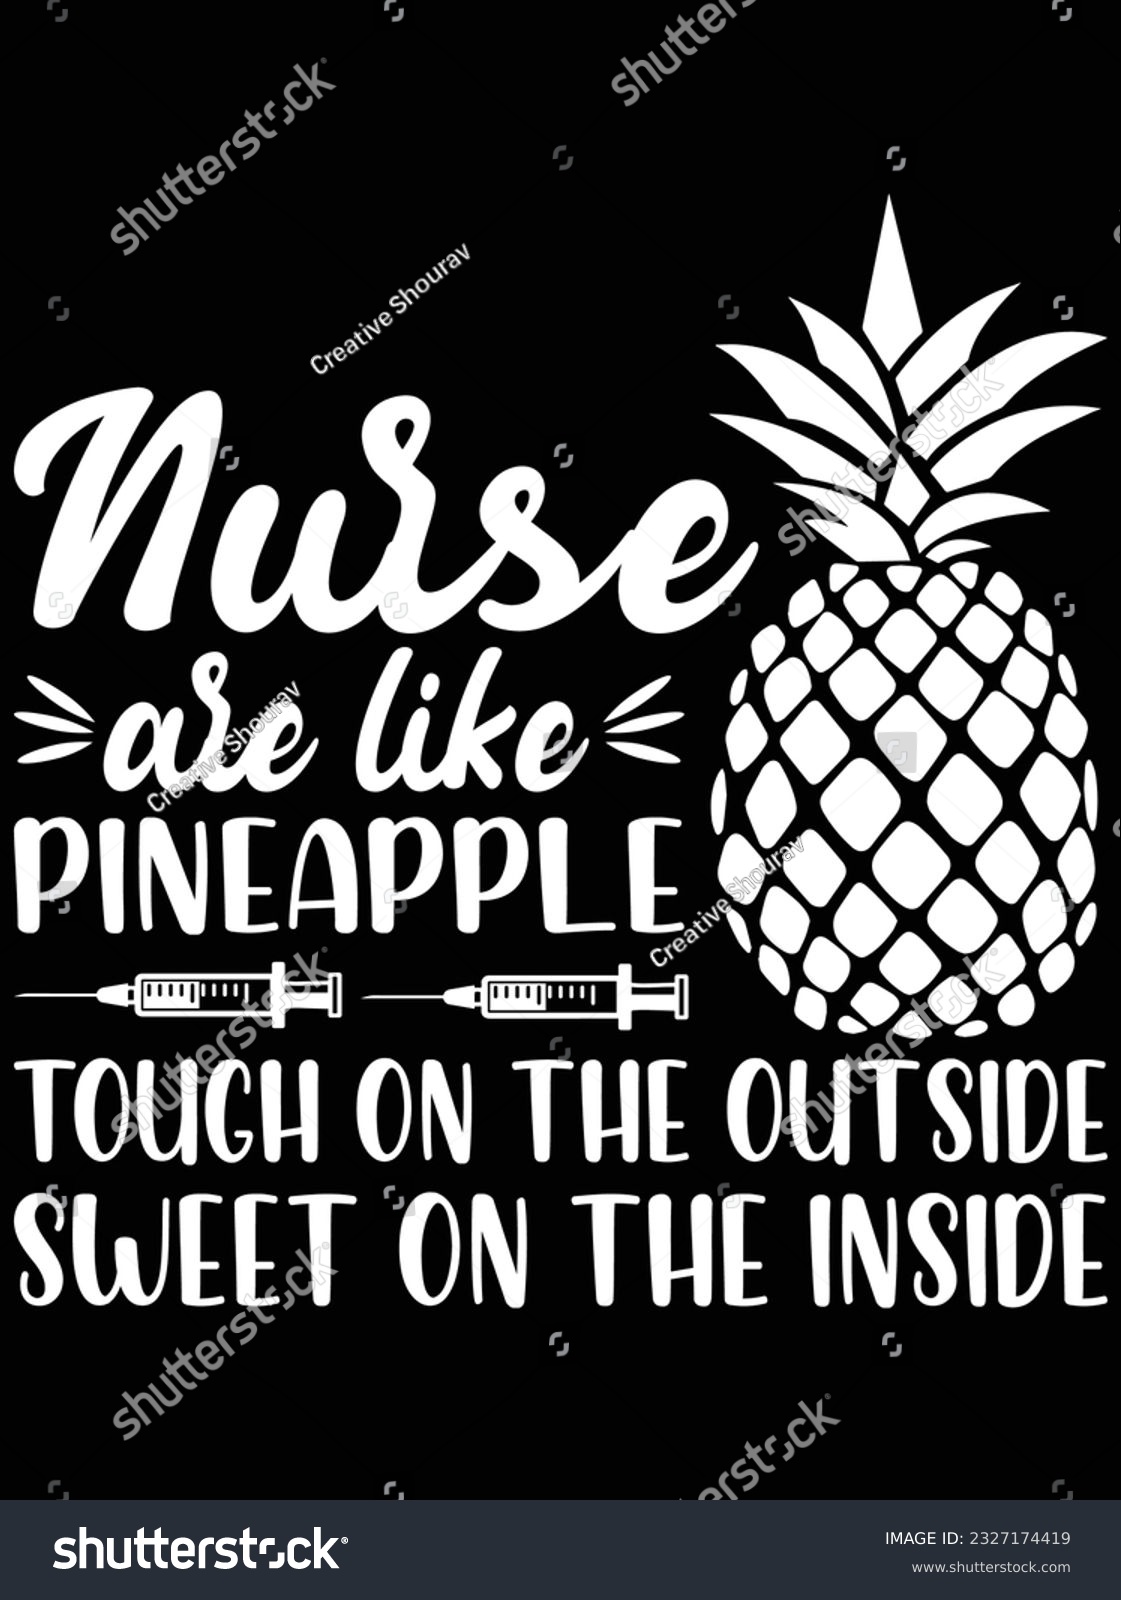 SVG of Nurse are like pineapple tough on the outside sweet on the inside vector art design, eps file. design file for t-shirt. SVG, EPS cuttable design file svg